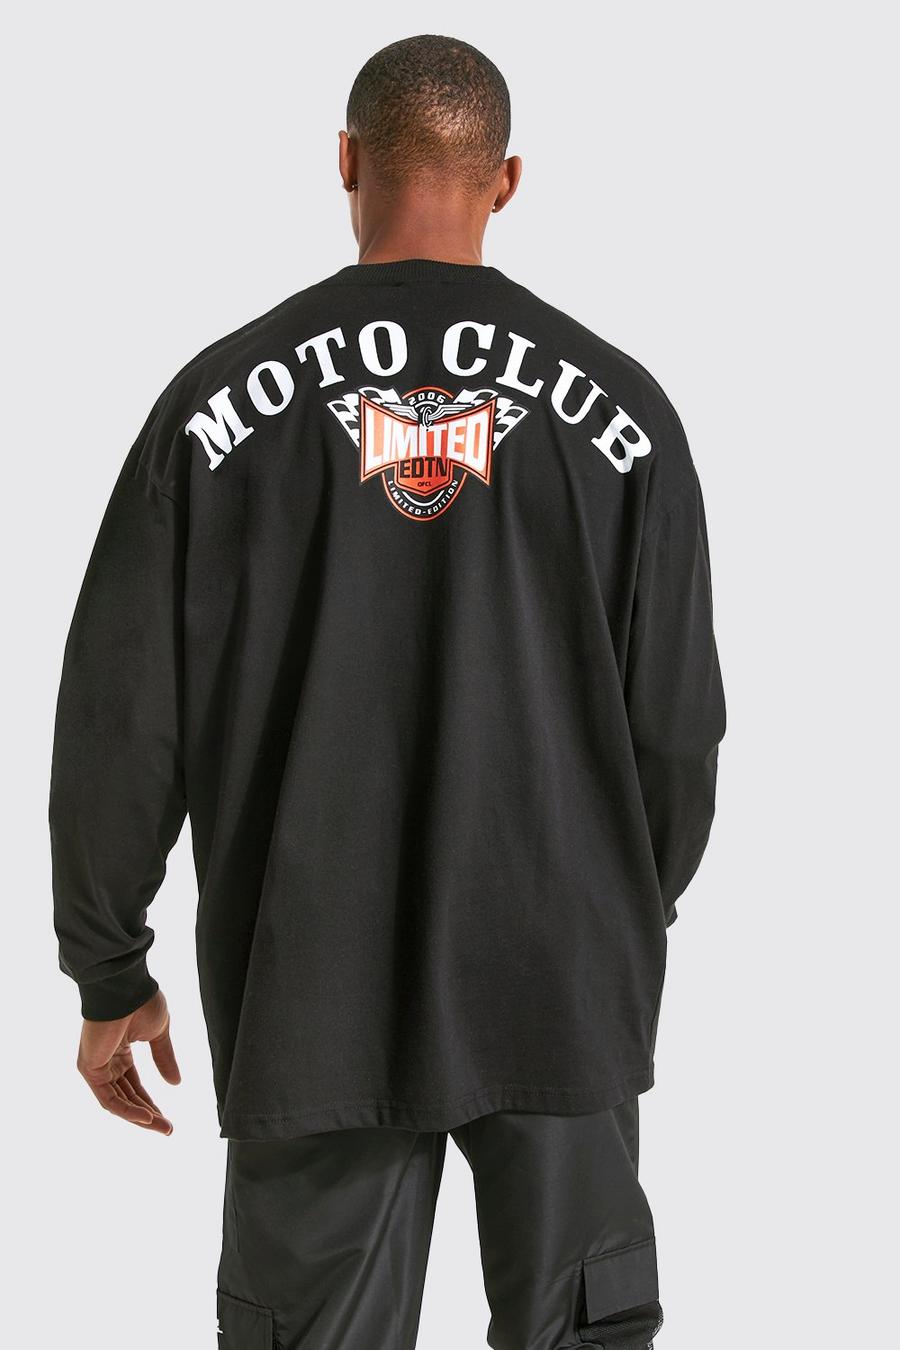 Langärmliges Oversize T-Shirt mit Moto Club Print, Black noir